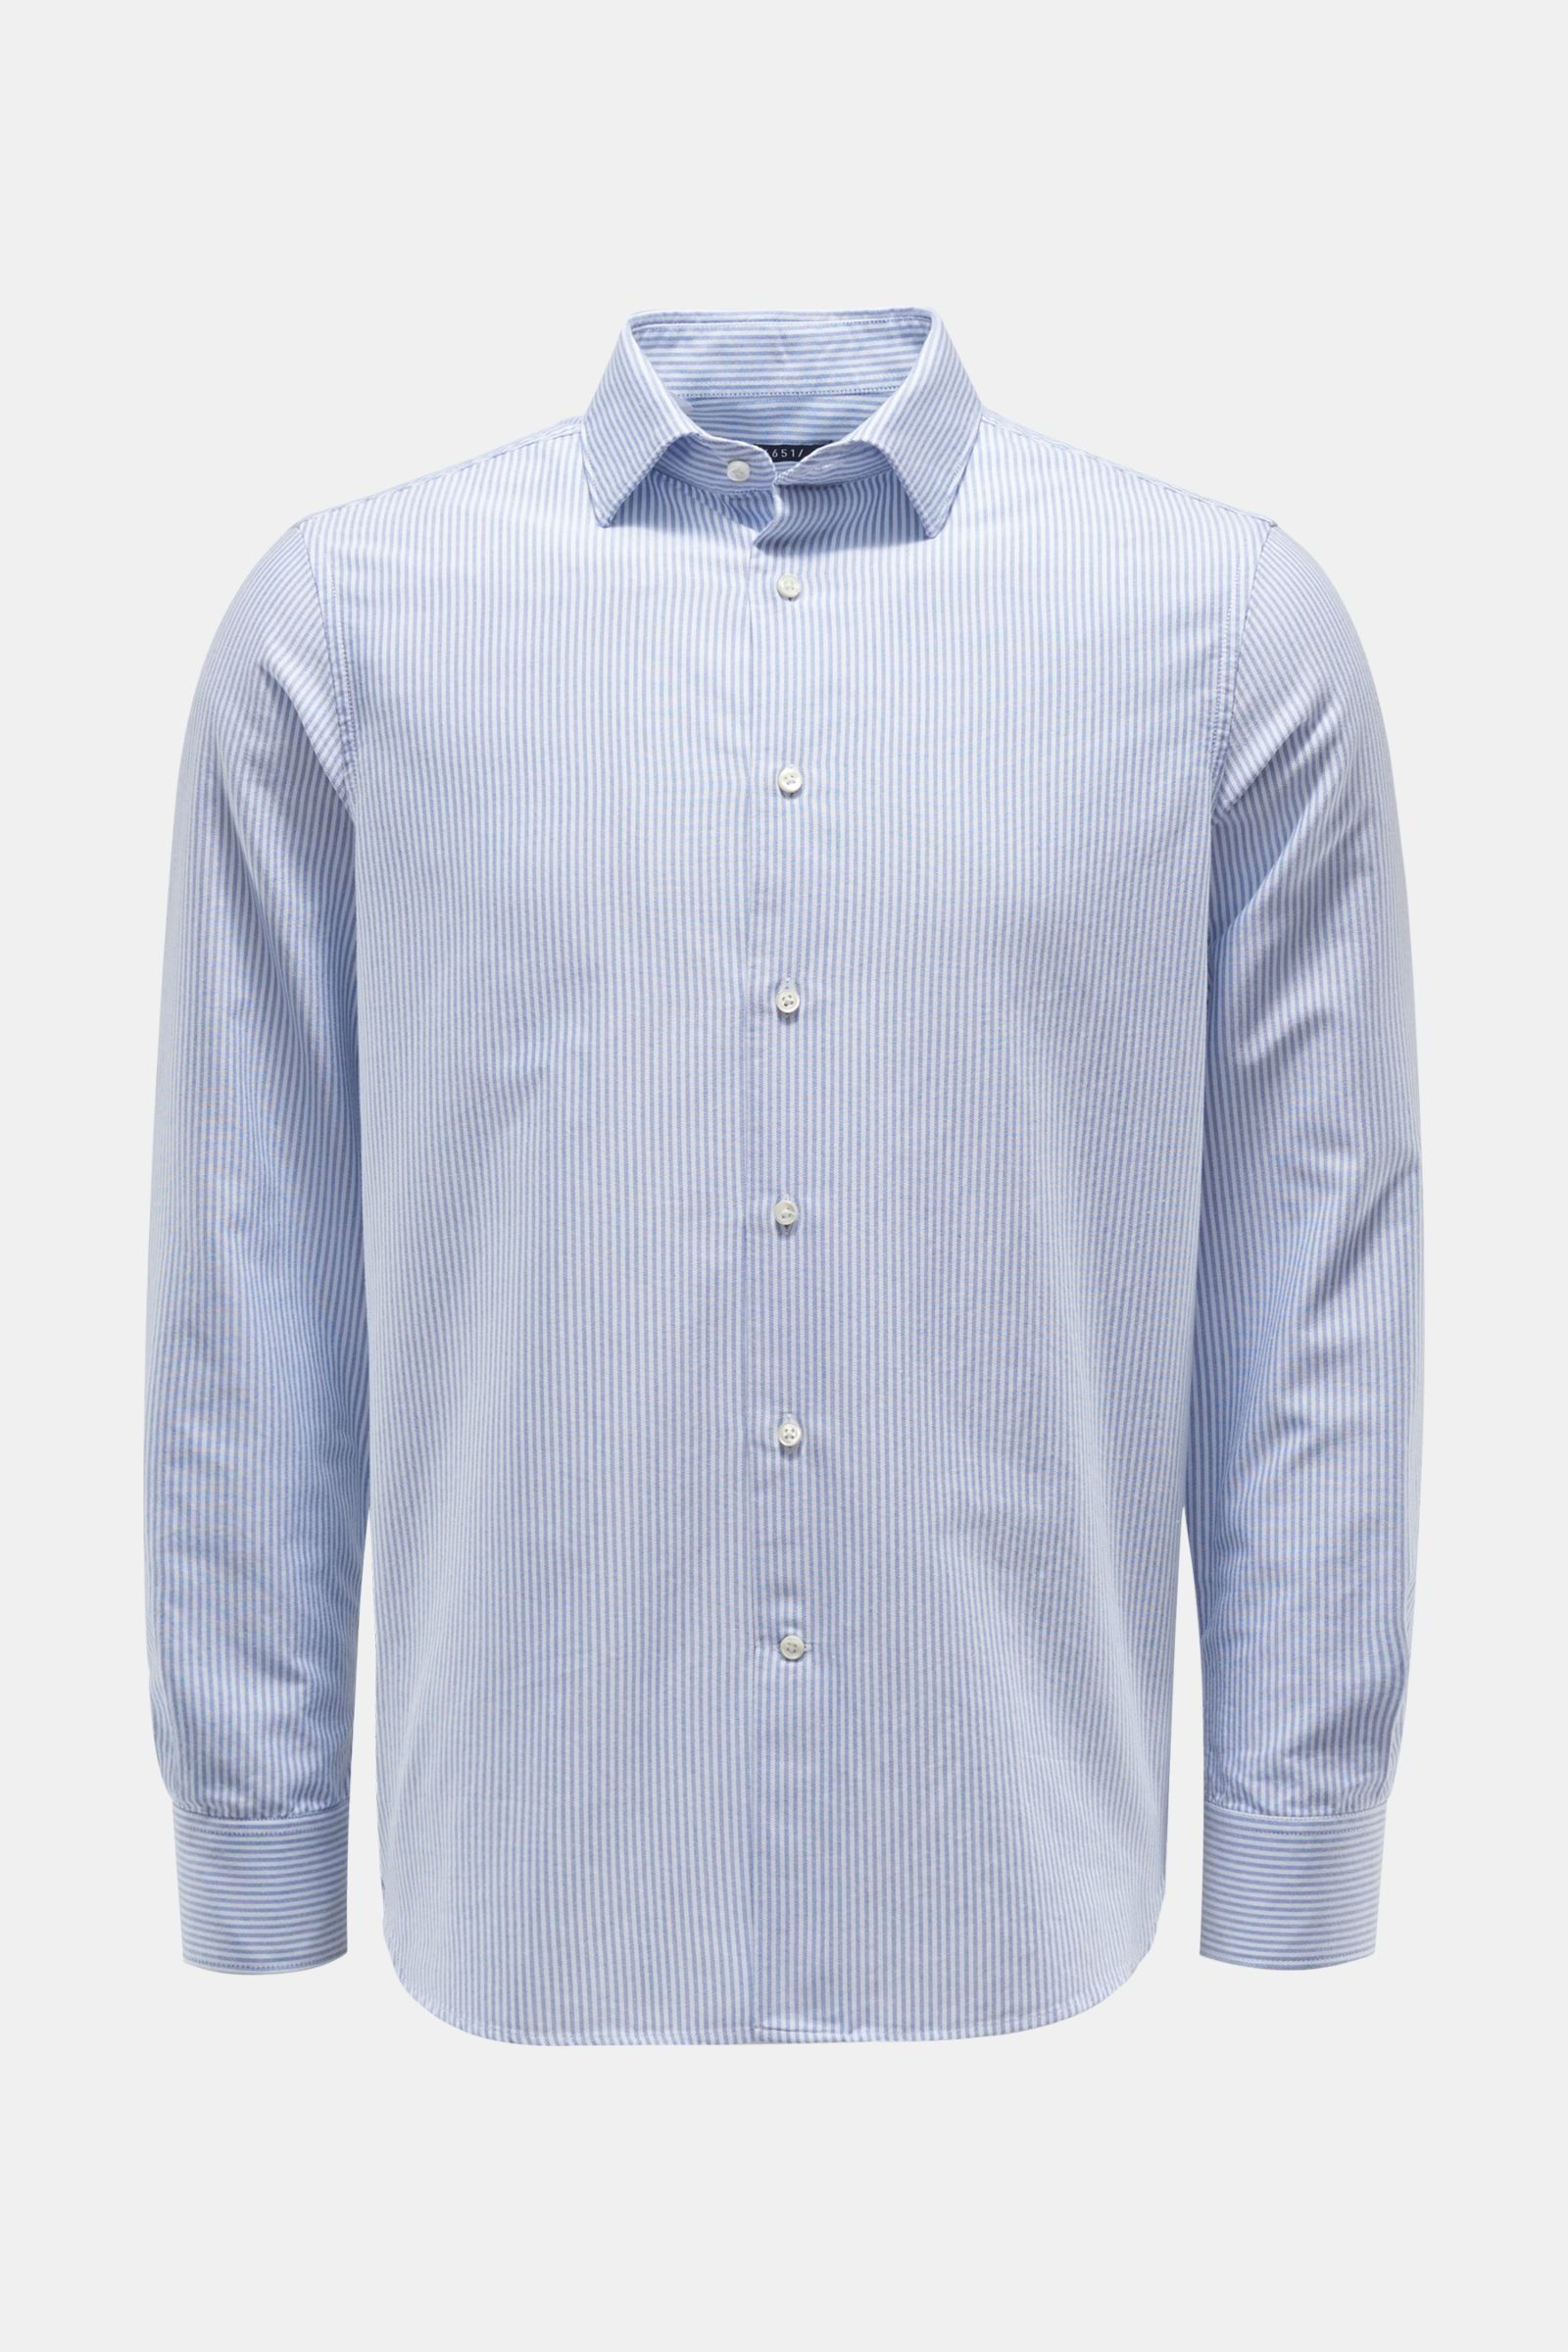 Oxford shirt Kent collar smoky blue/white striped